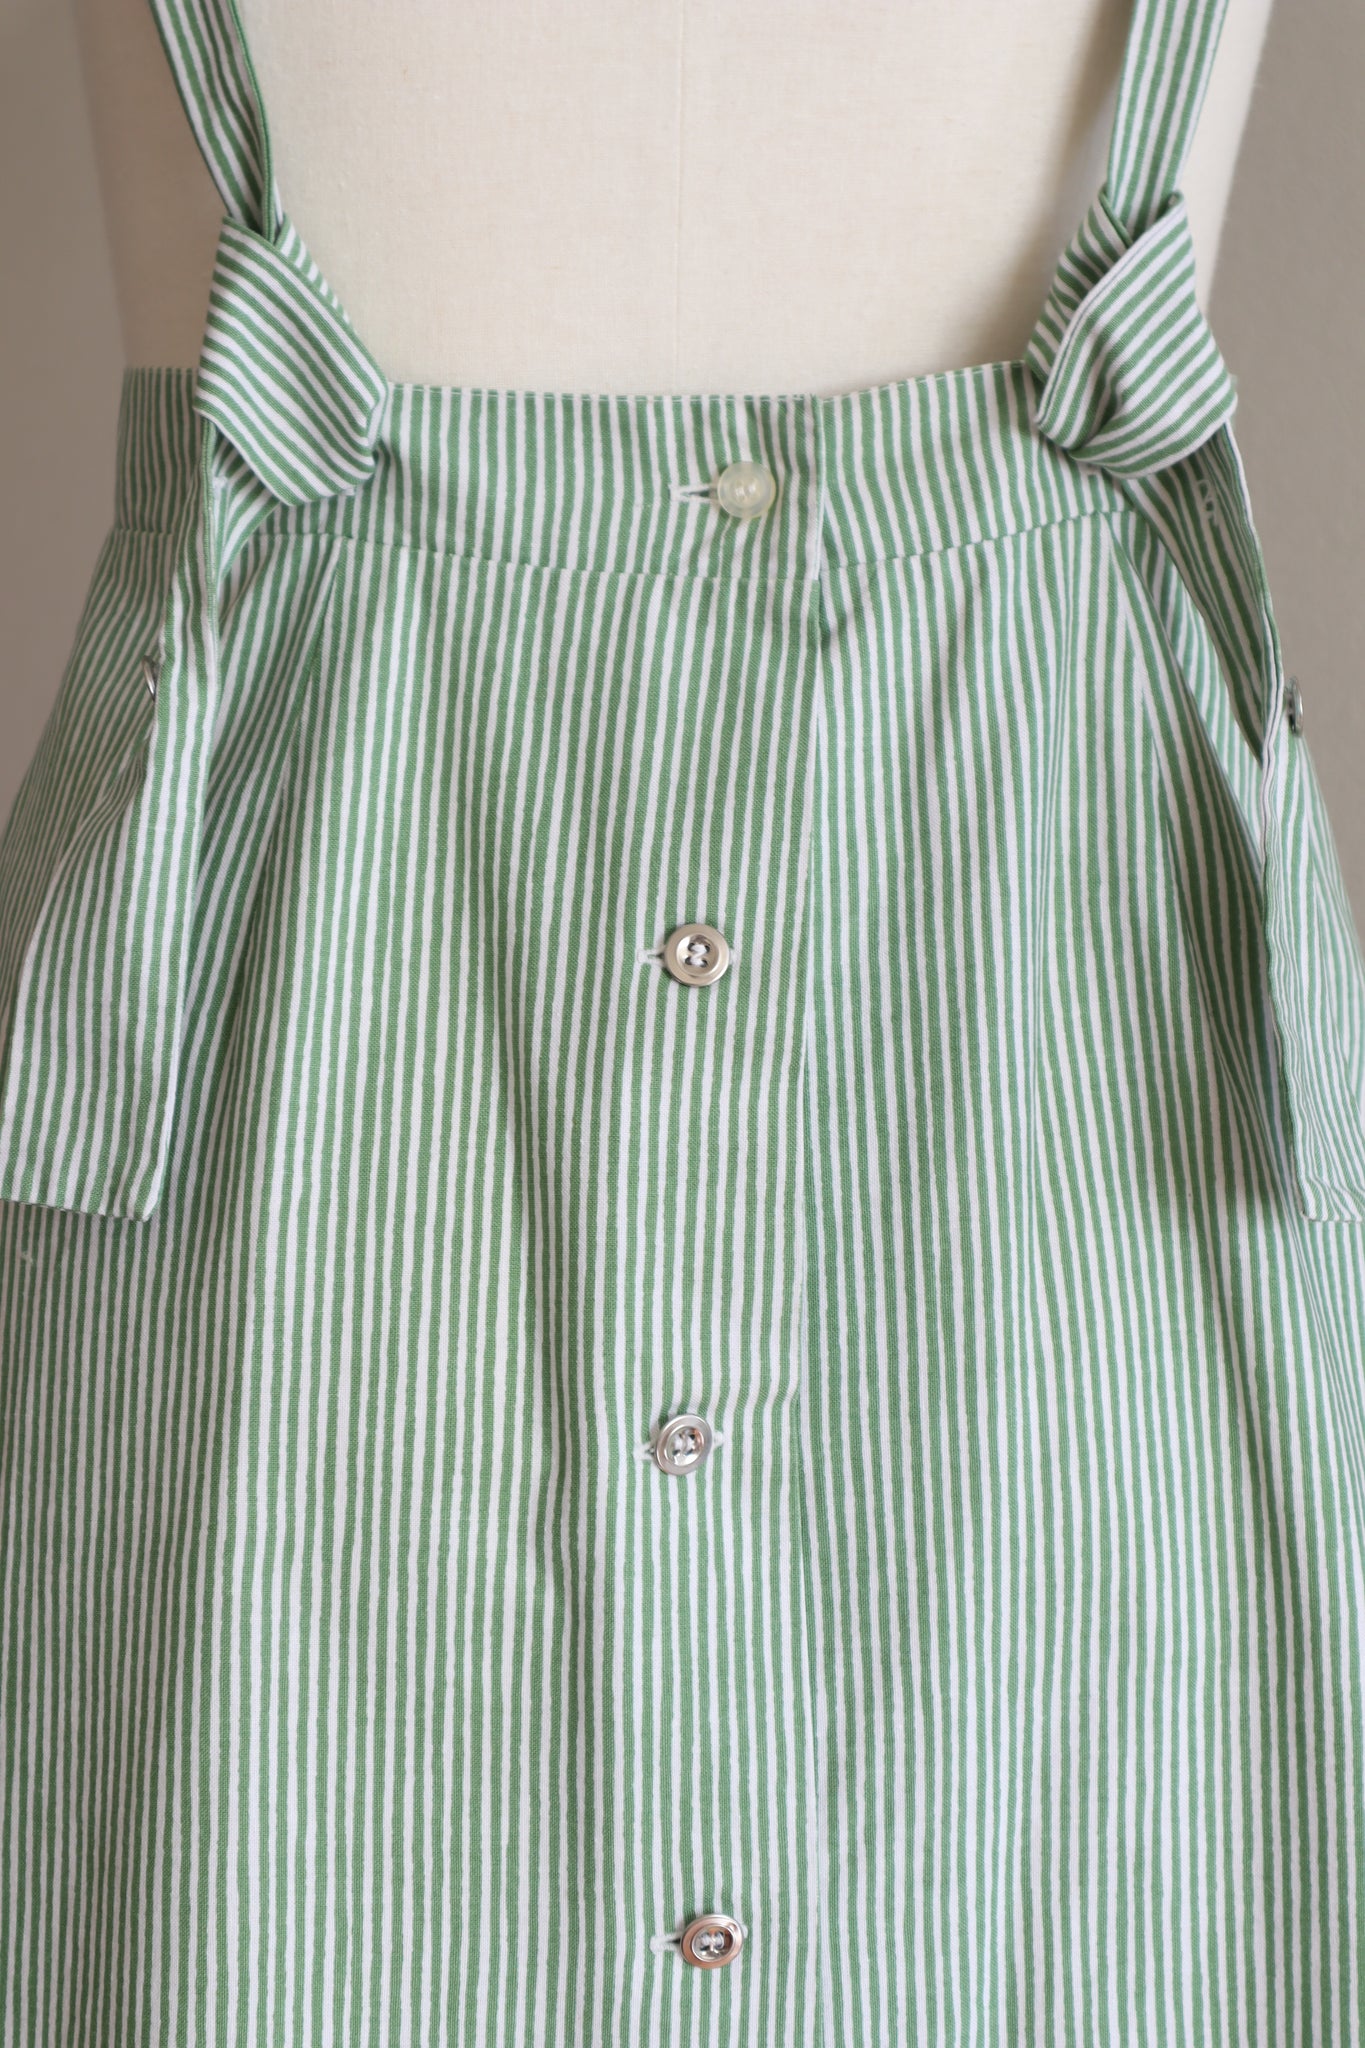 70s marimekko Green Striped Dress